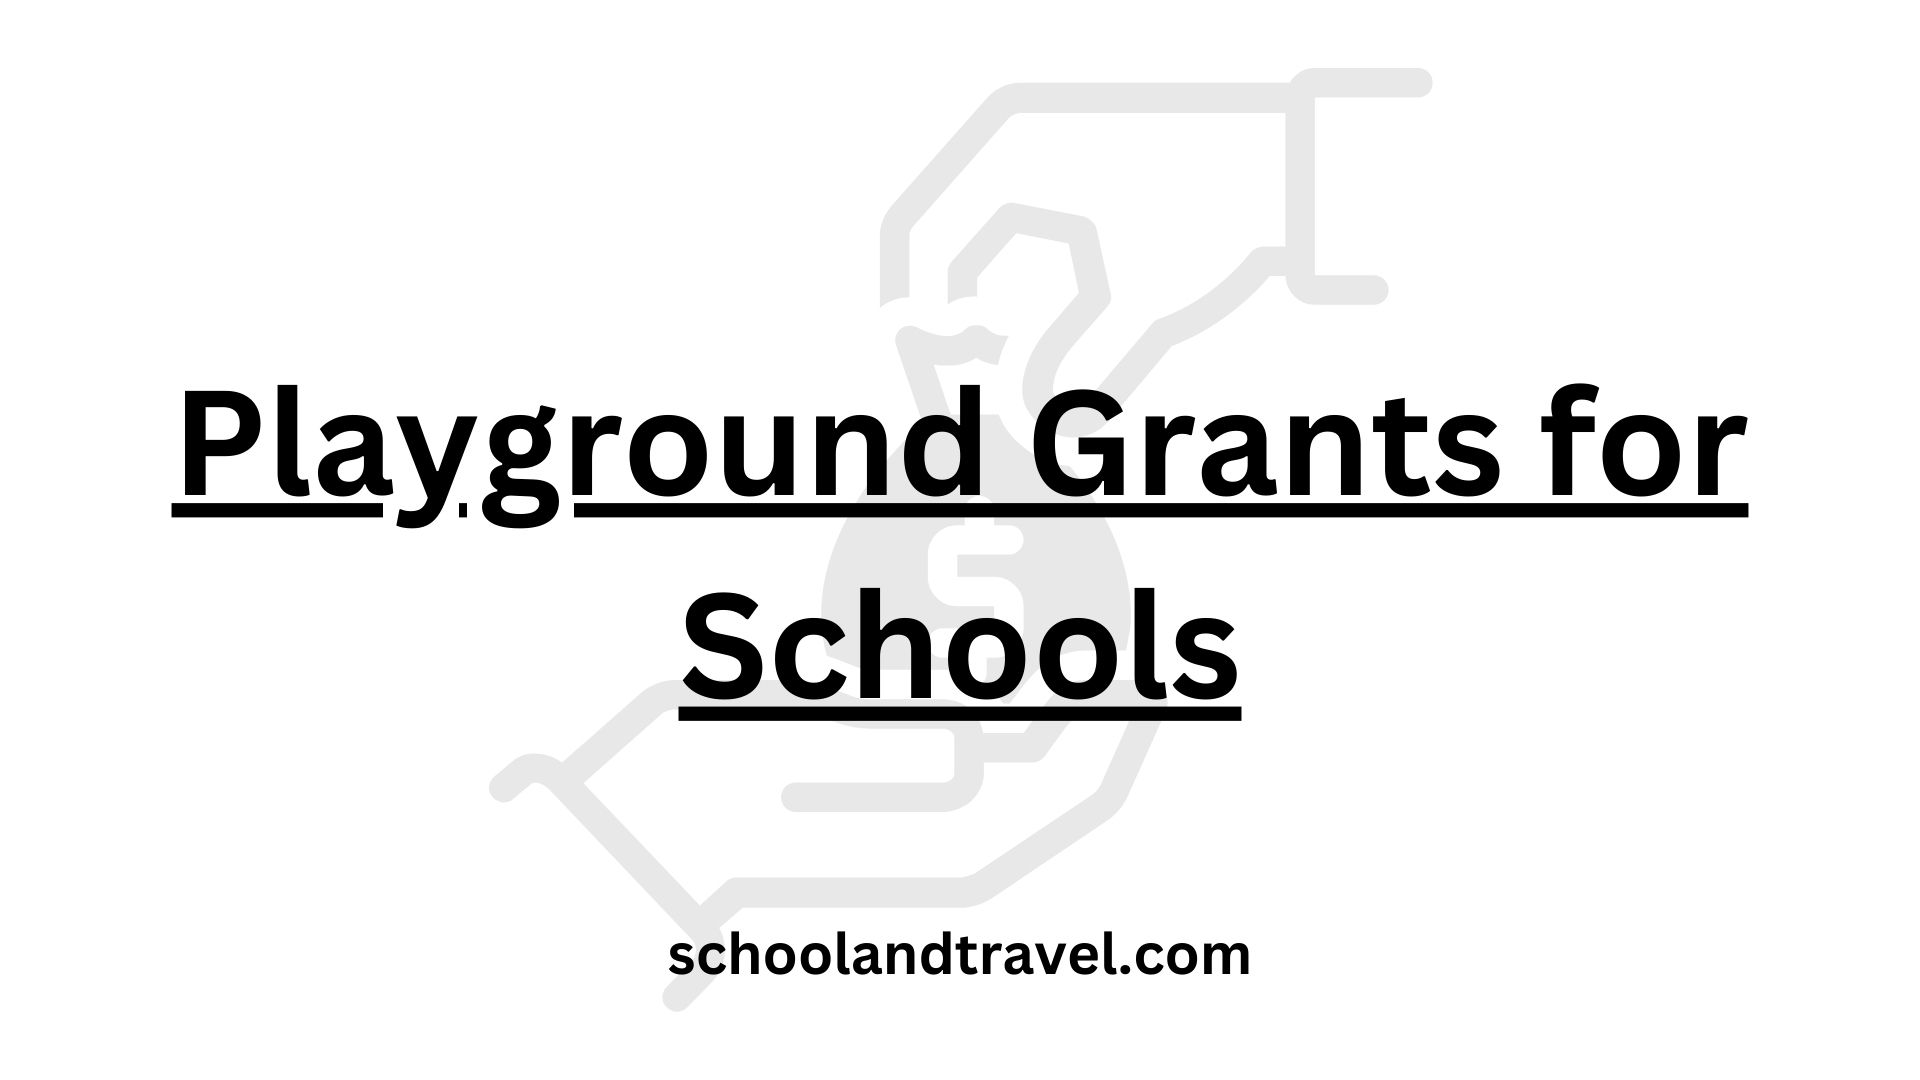 Playground Grants for Schools